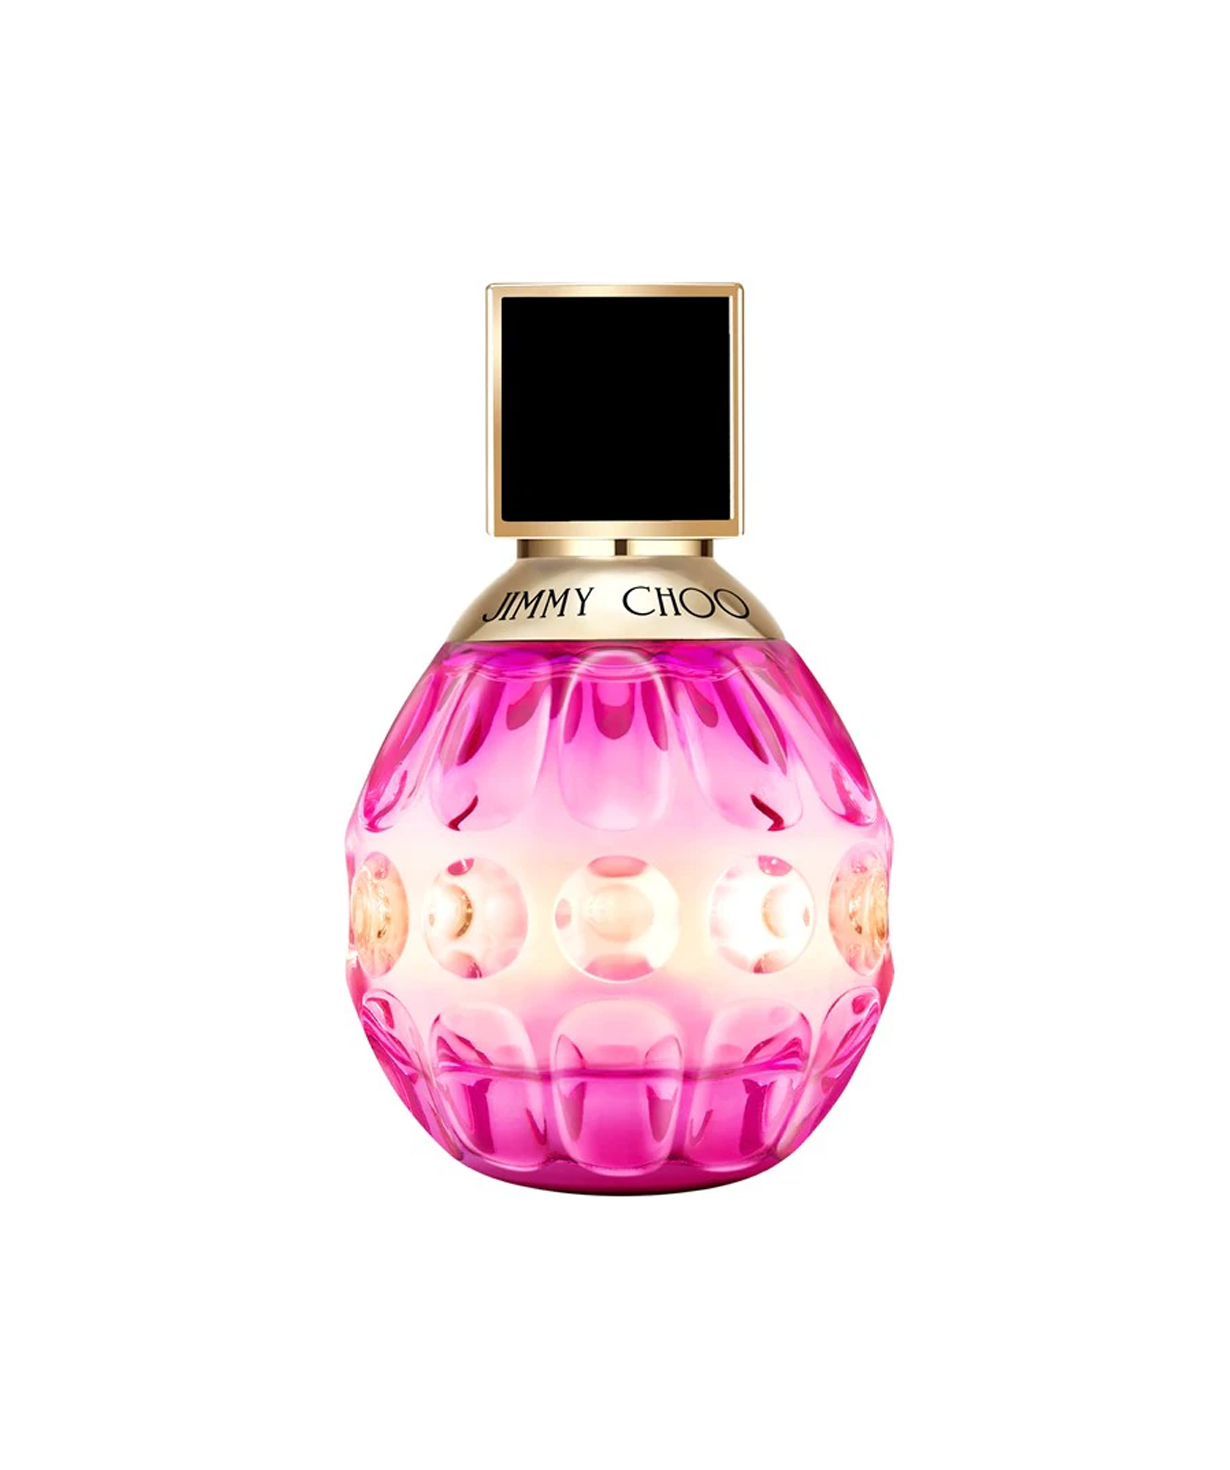 Perfume «Jimmy Choo» Rose Passion, for women, 40 ml